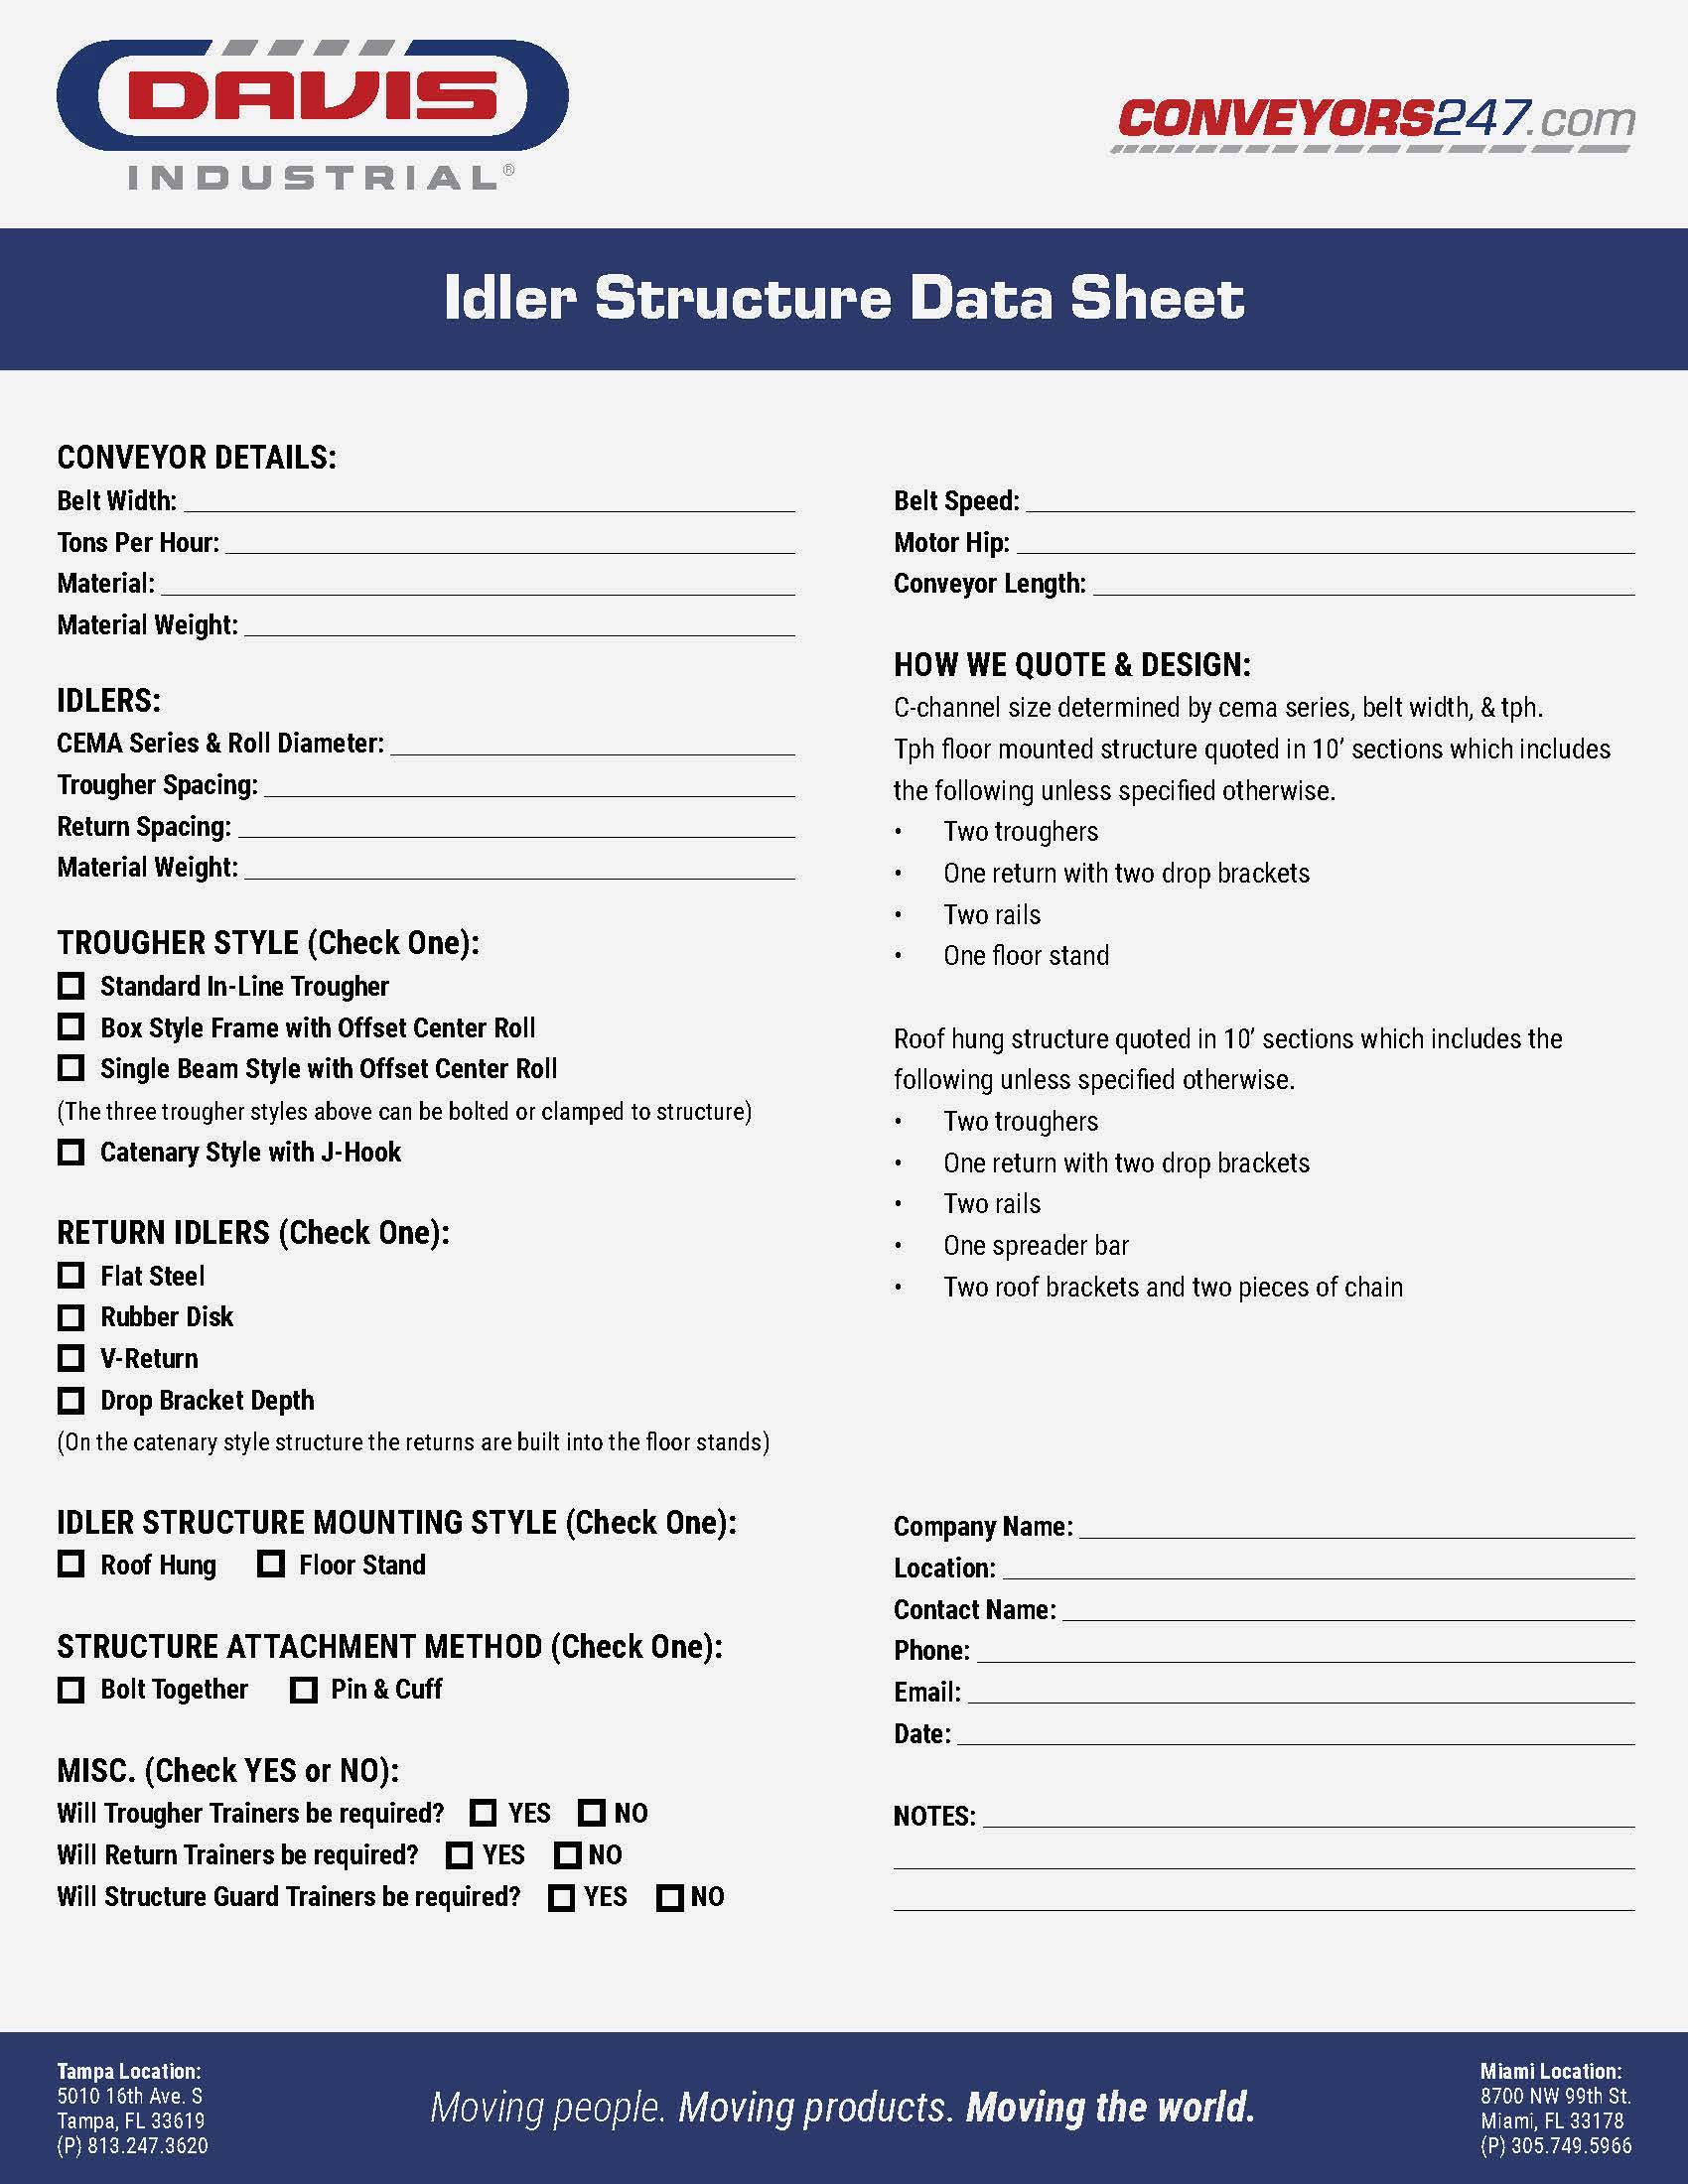 Davis_Idler Structure Data Sheet